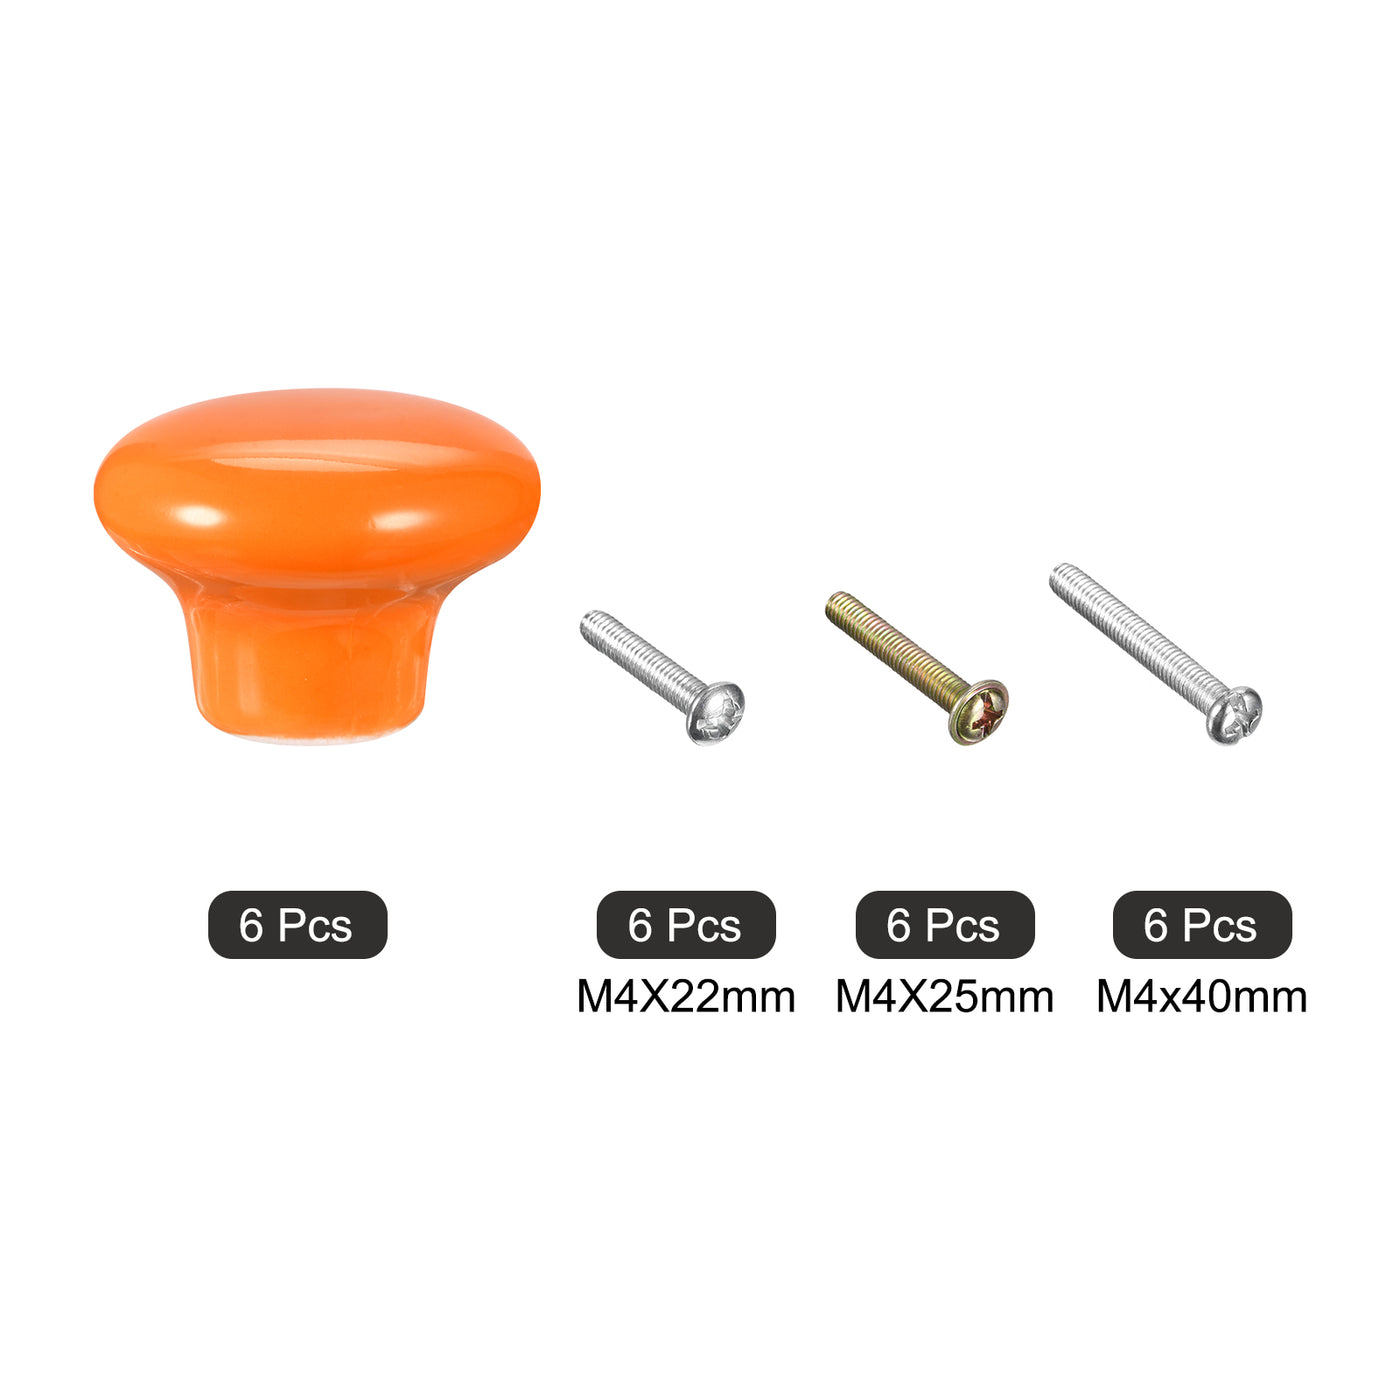 uxcell Uxcell Ceramic Drawer Knobs 6pcs Mushroom Shape Pulls 0.94"x1.26" for Dresser(Orange)